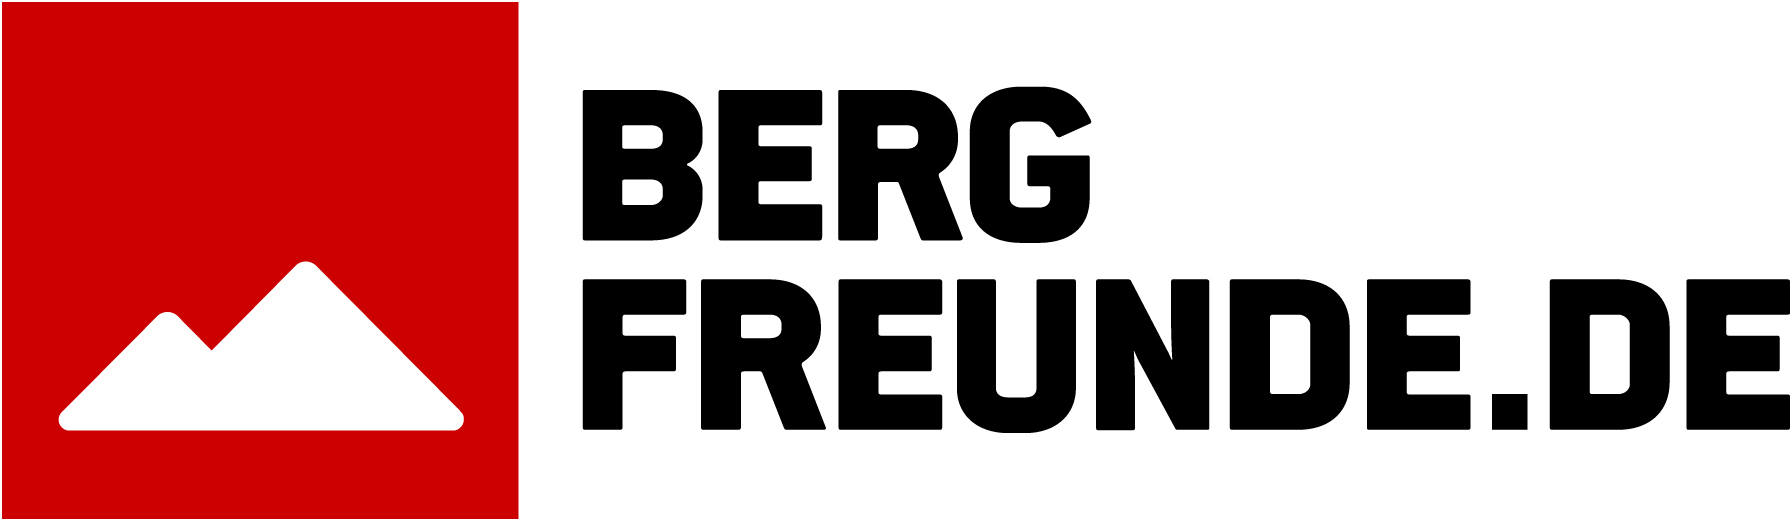 bergfreunde logo